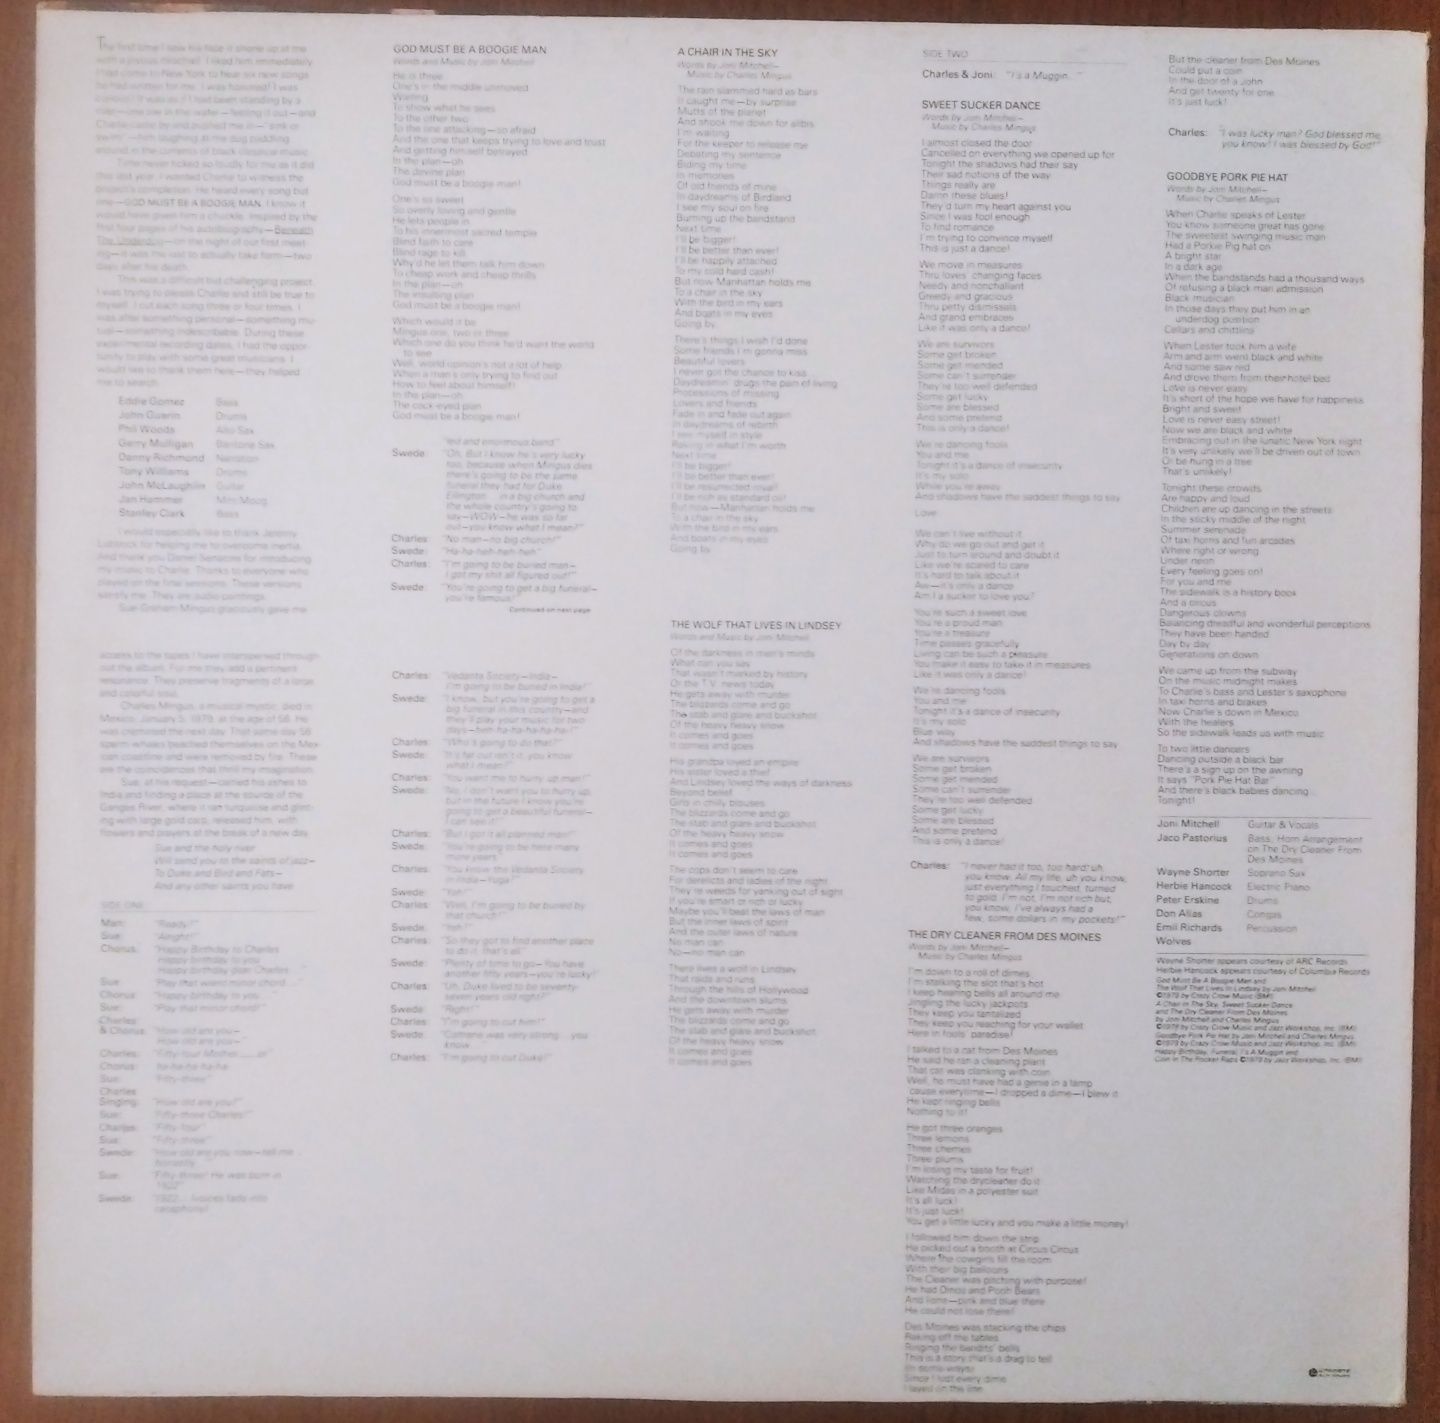 Joni Mitchell disco de vinil "Mingus"